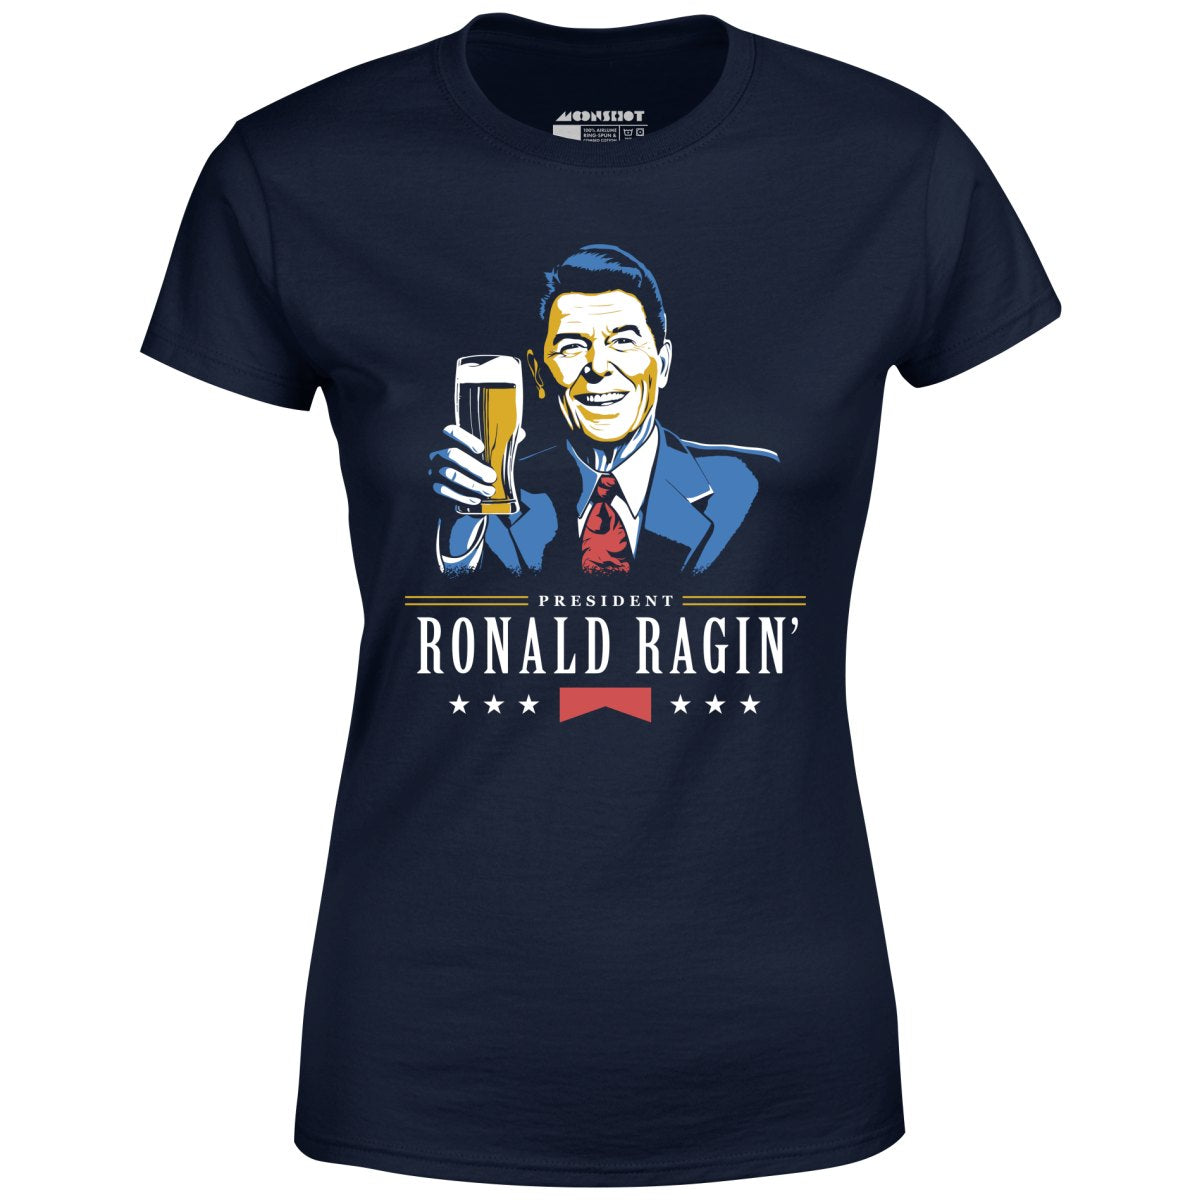 President Ronald Ragin' - Women's T-Shirt